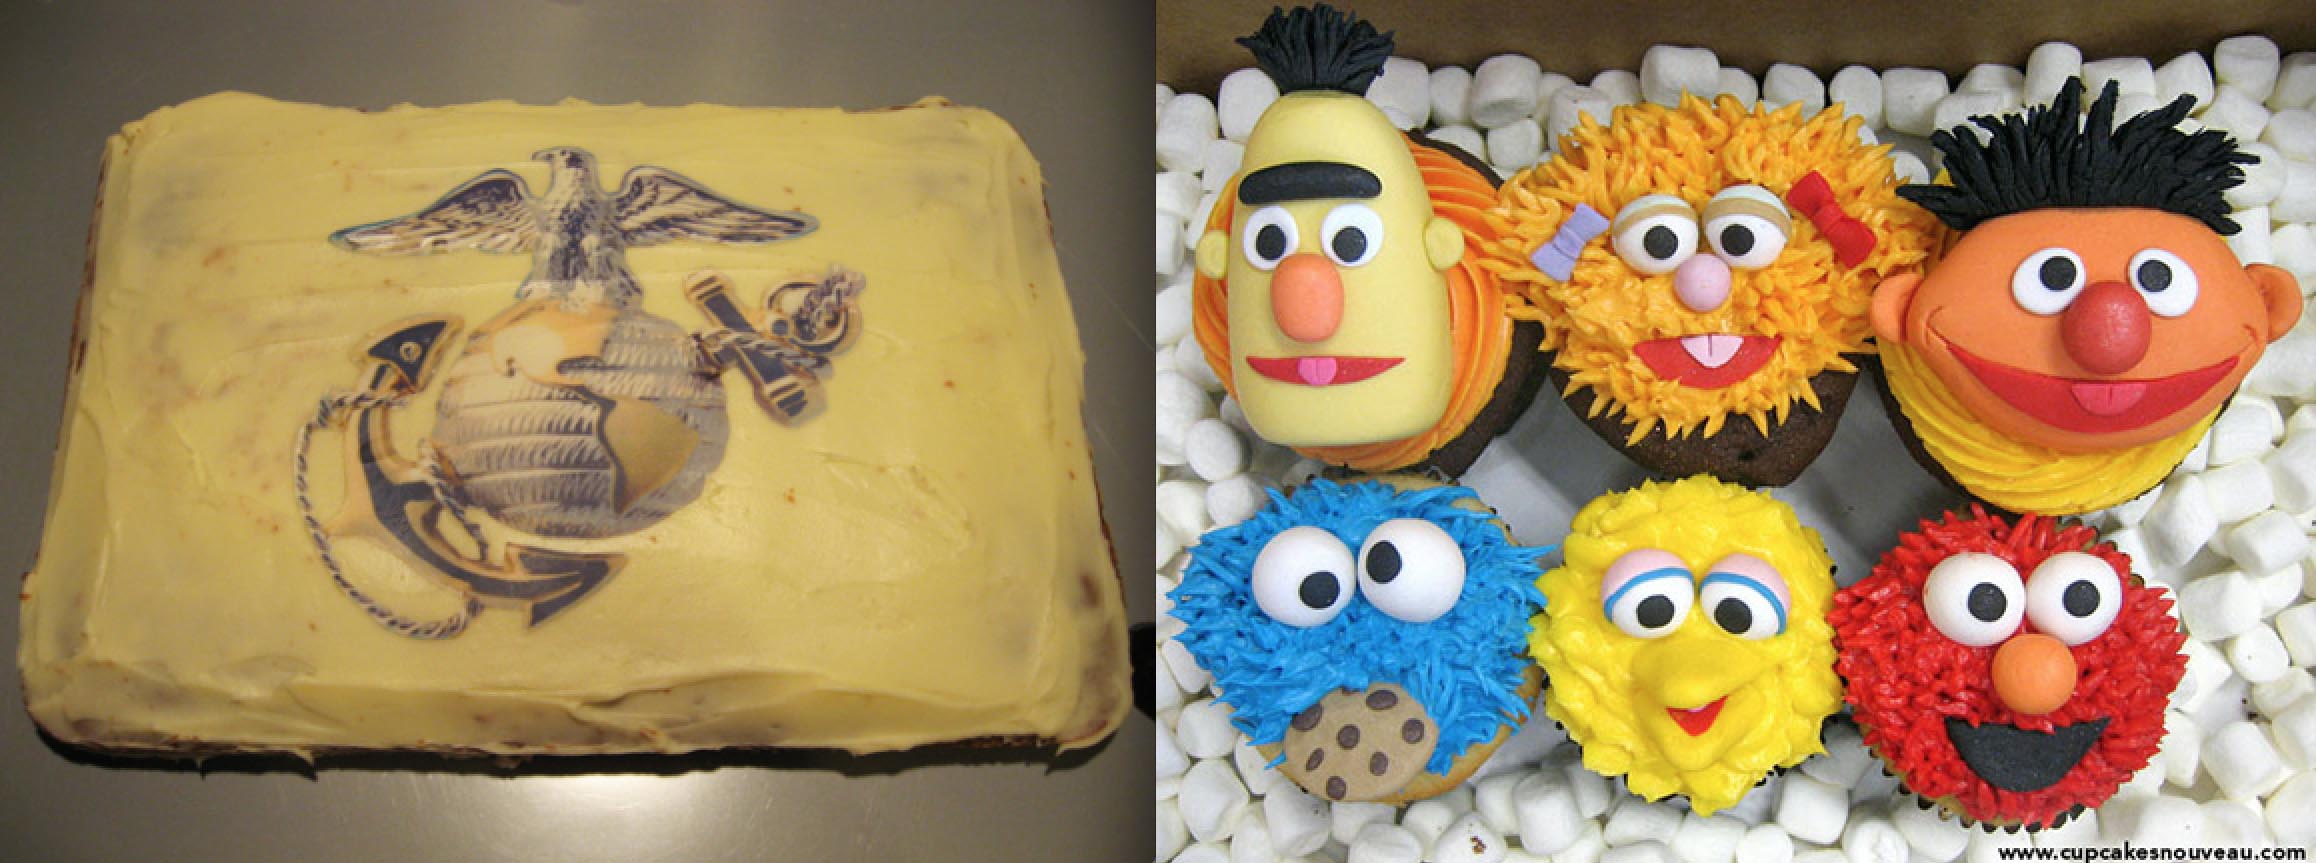 Marine Corp cake & Sesame Street cupcakes